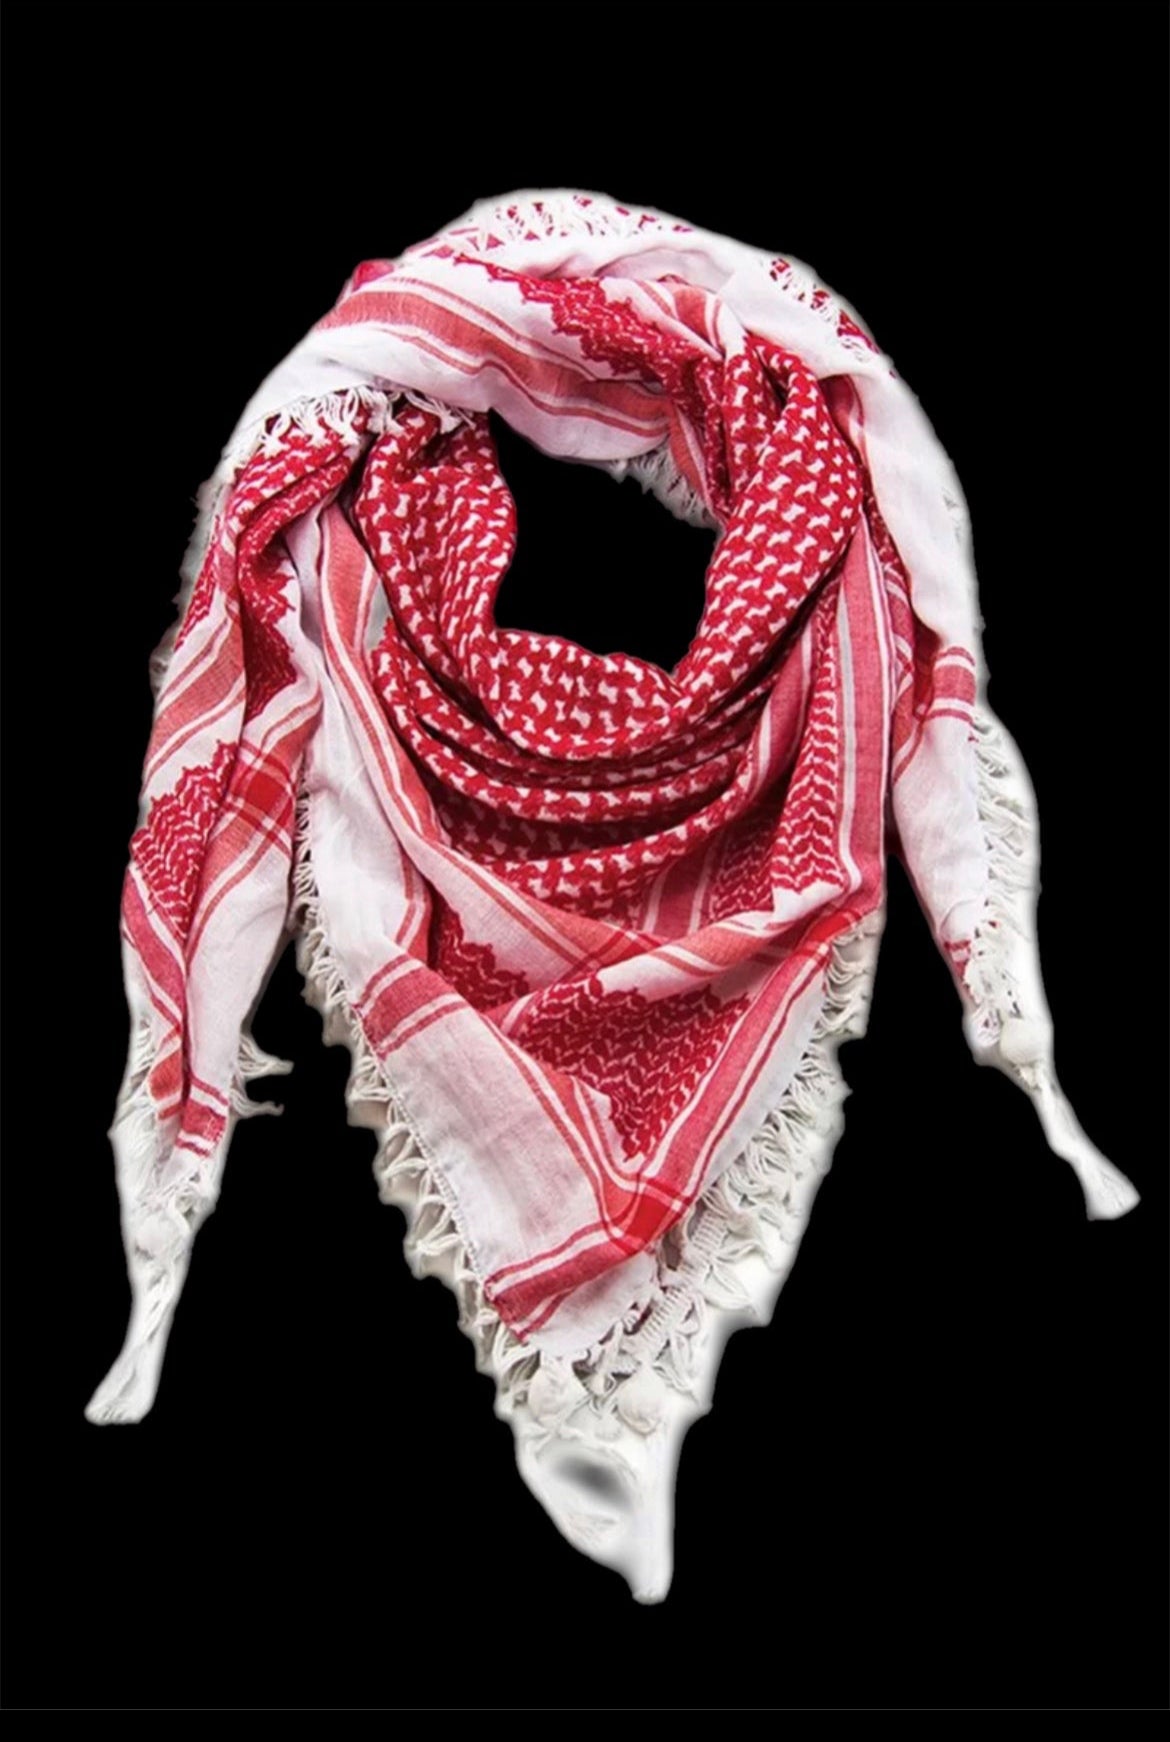 Traditional woven Palestinian Keffiyeh, Kufiya, Shemagh, or scarf with classic Palestinian patterns